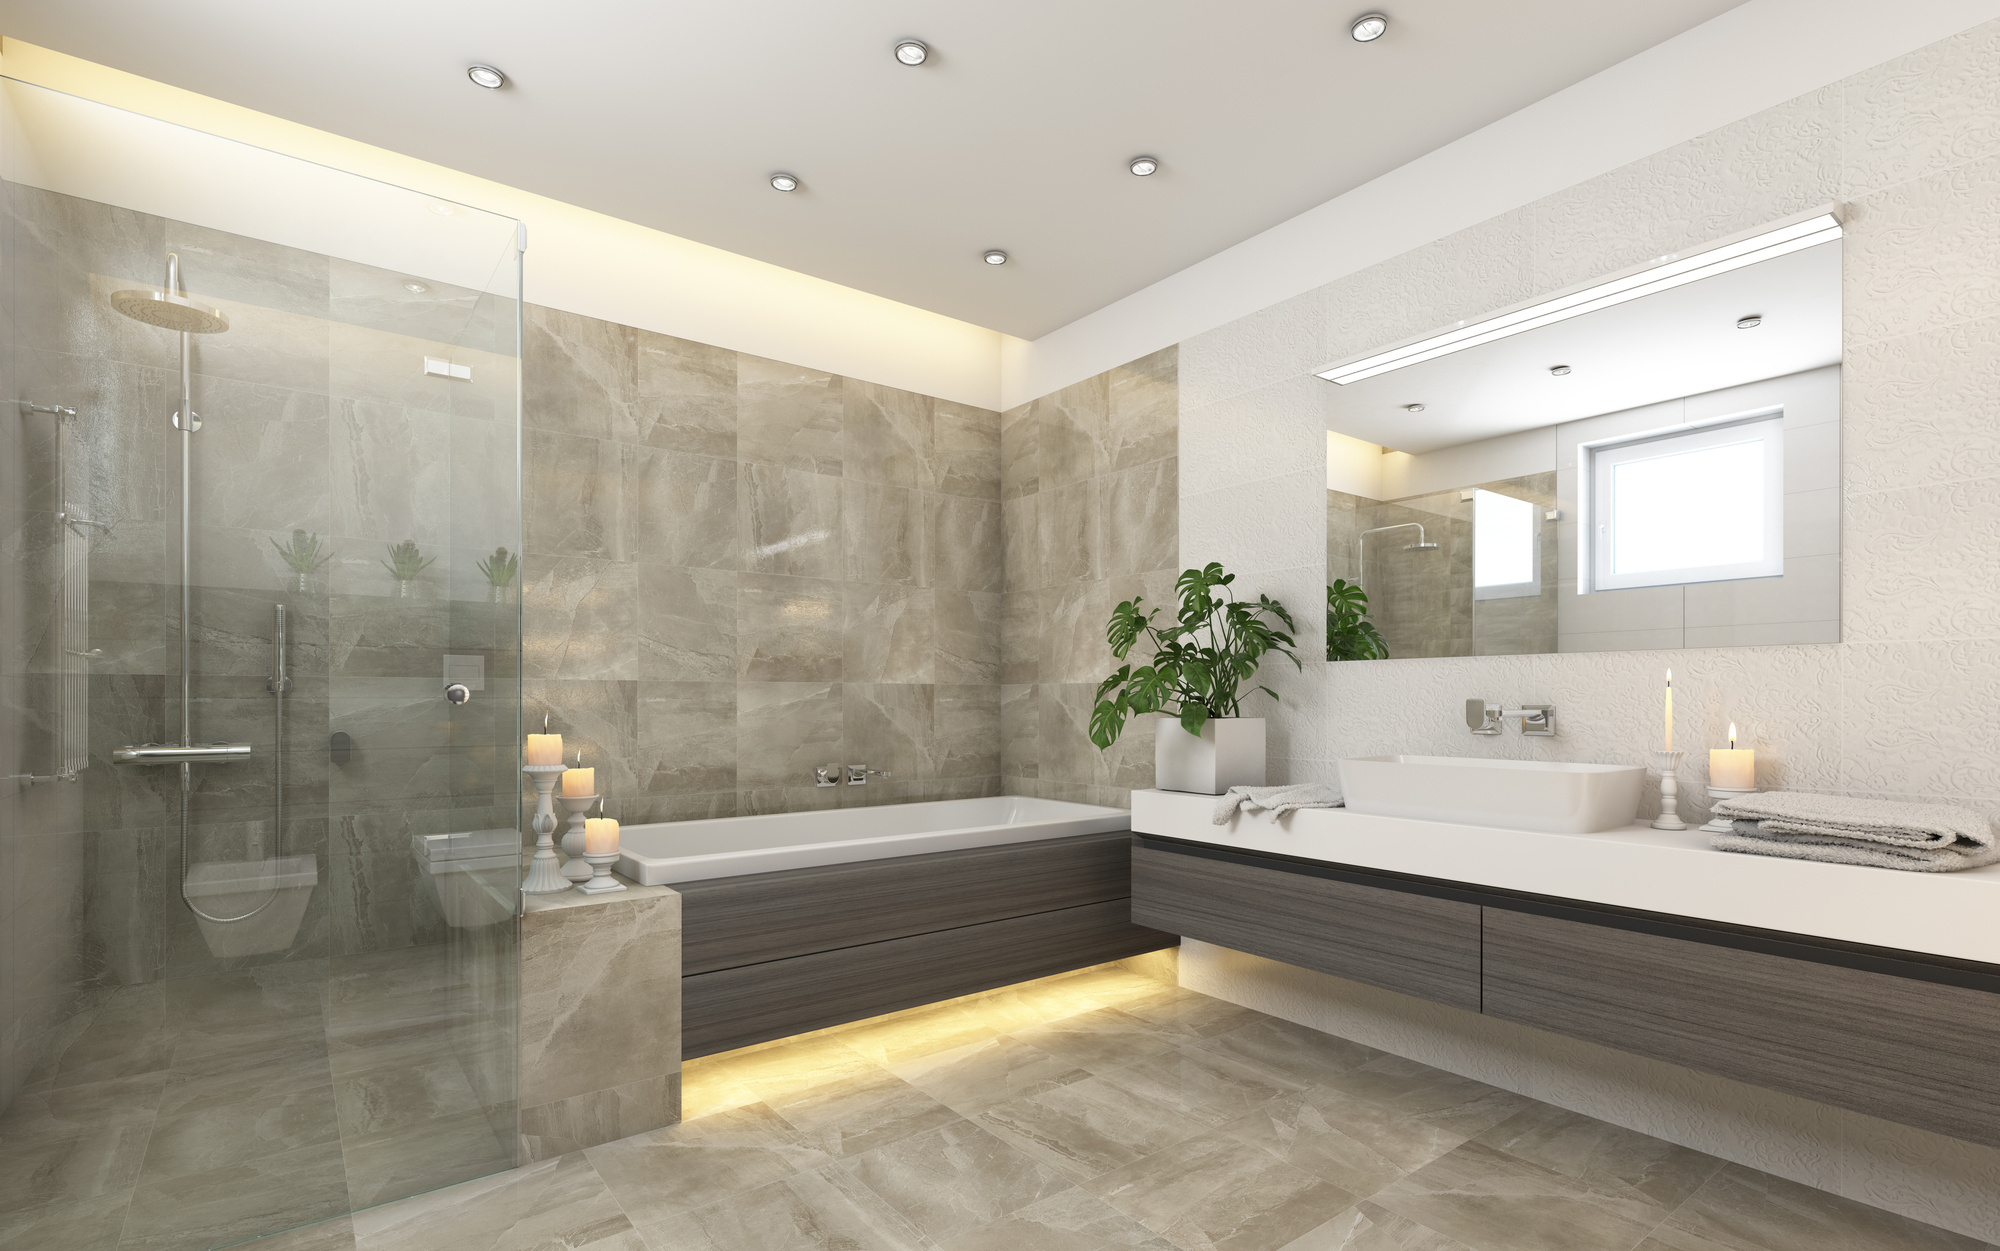 10 Common Features Of Luxury Bathroom Designs